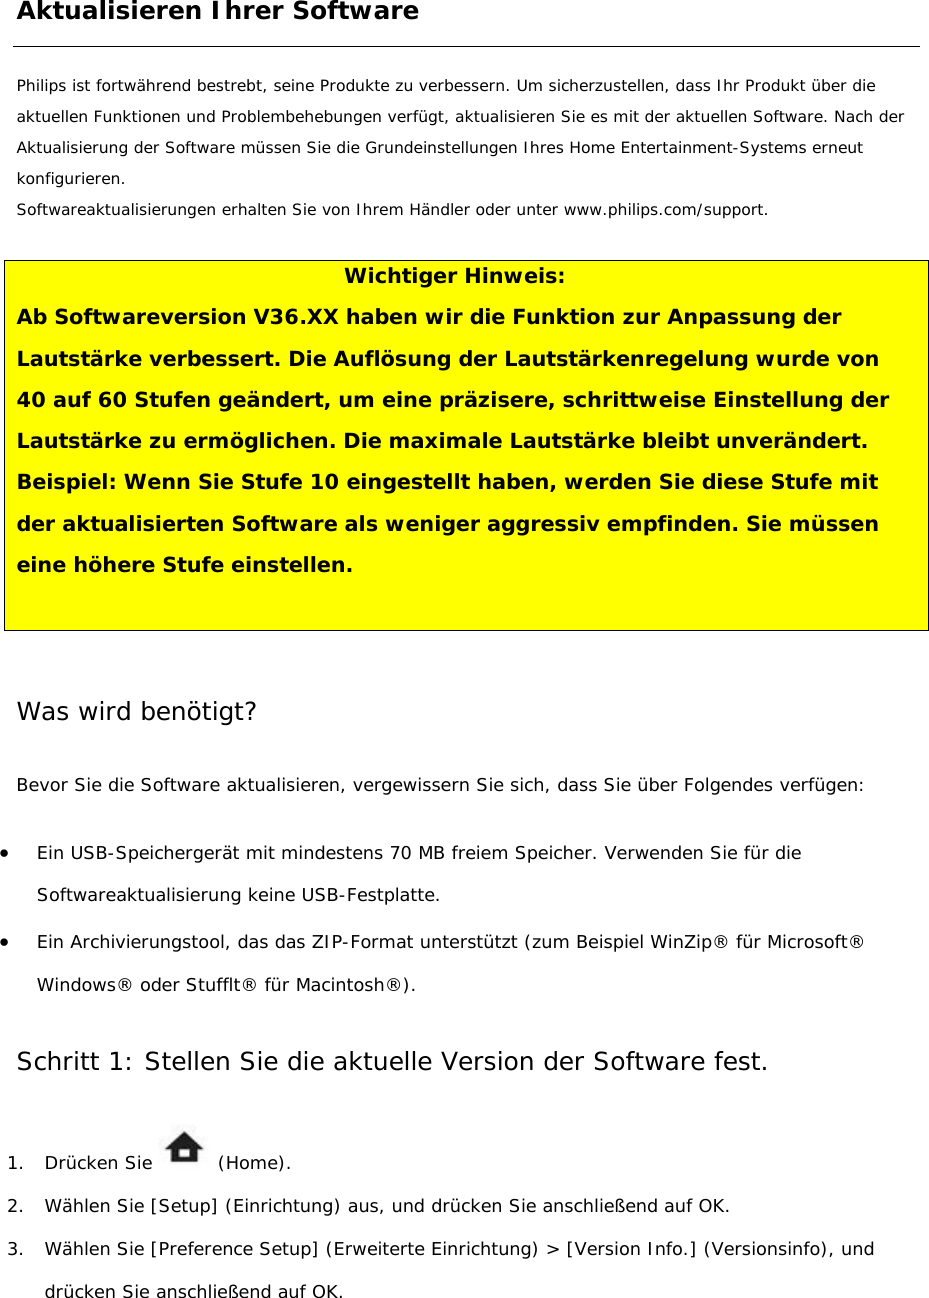 Page 1 of 5 - Philips HTS9540/12 - FUR 2k10 S W1225 (Version56)_DEU User Manual Firmware-Upgrade Liesmich-Datei Hts9540 12 Deu